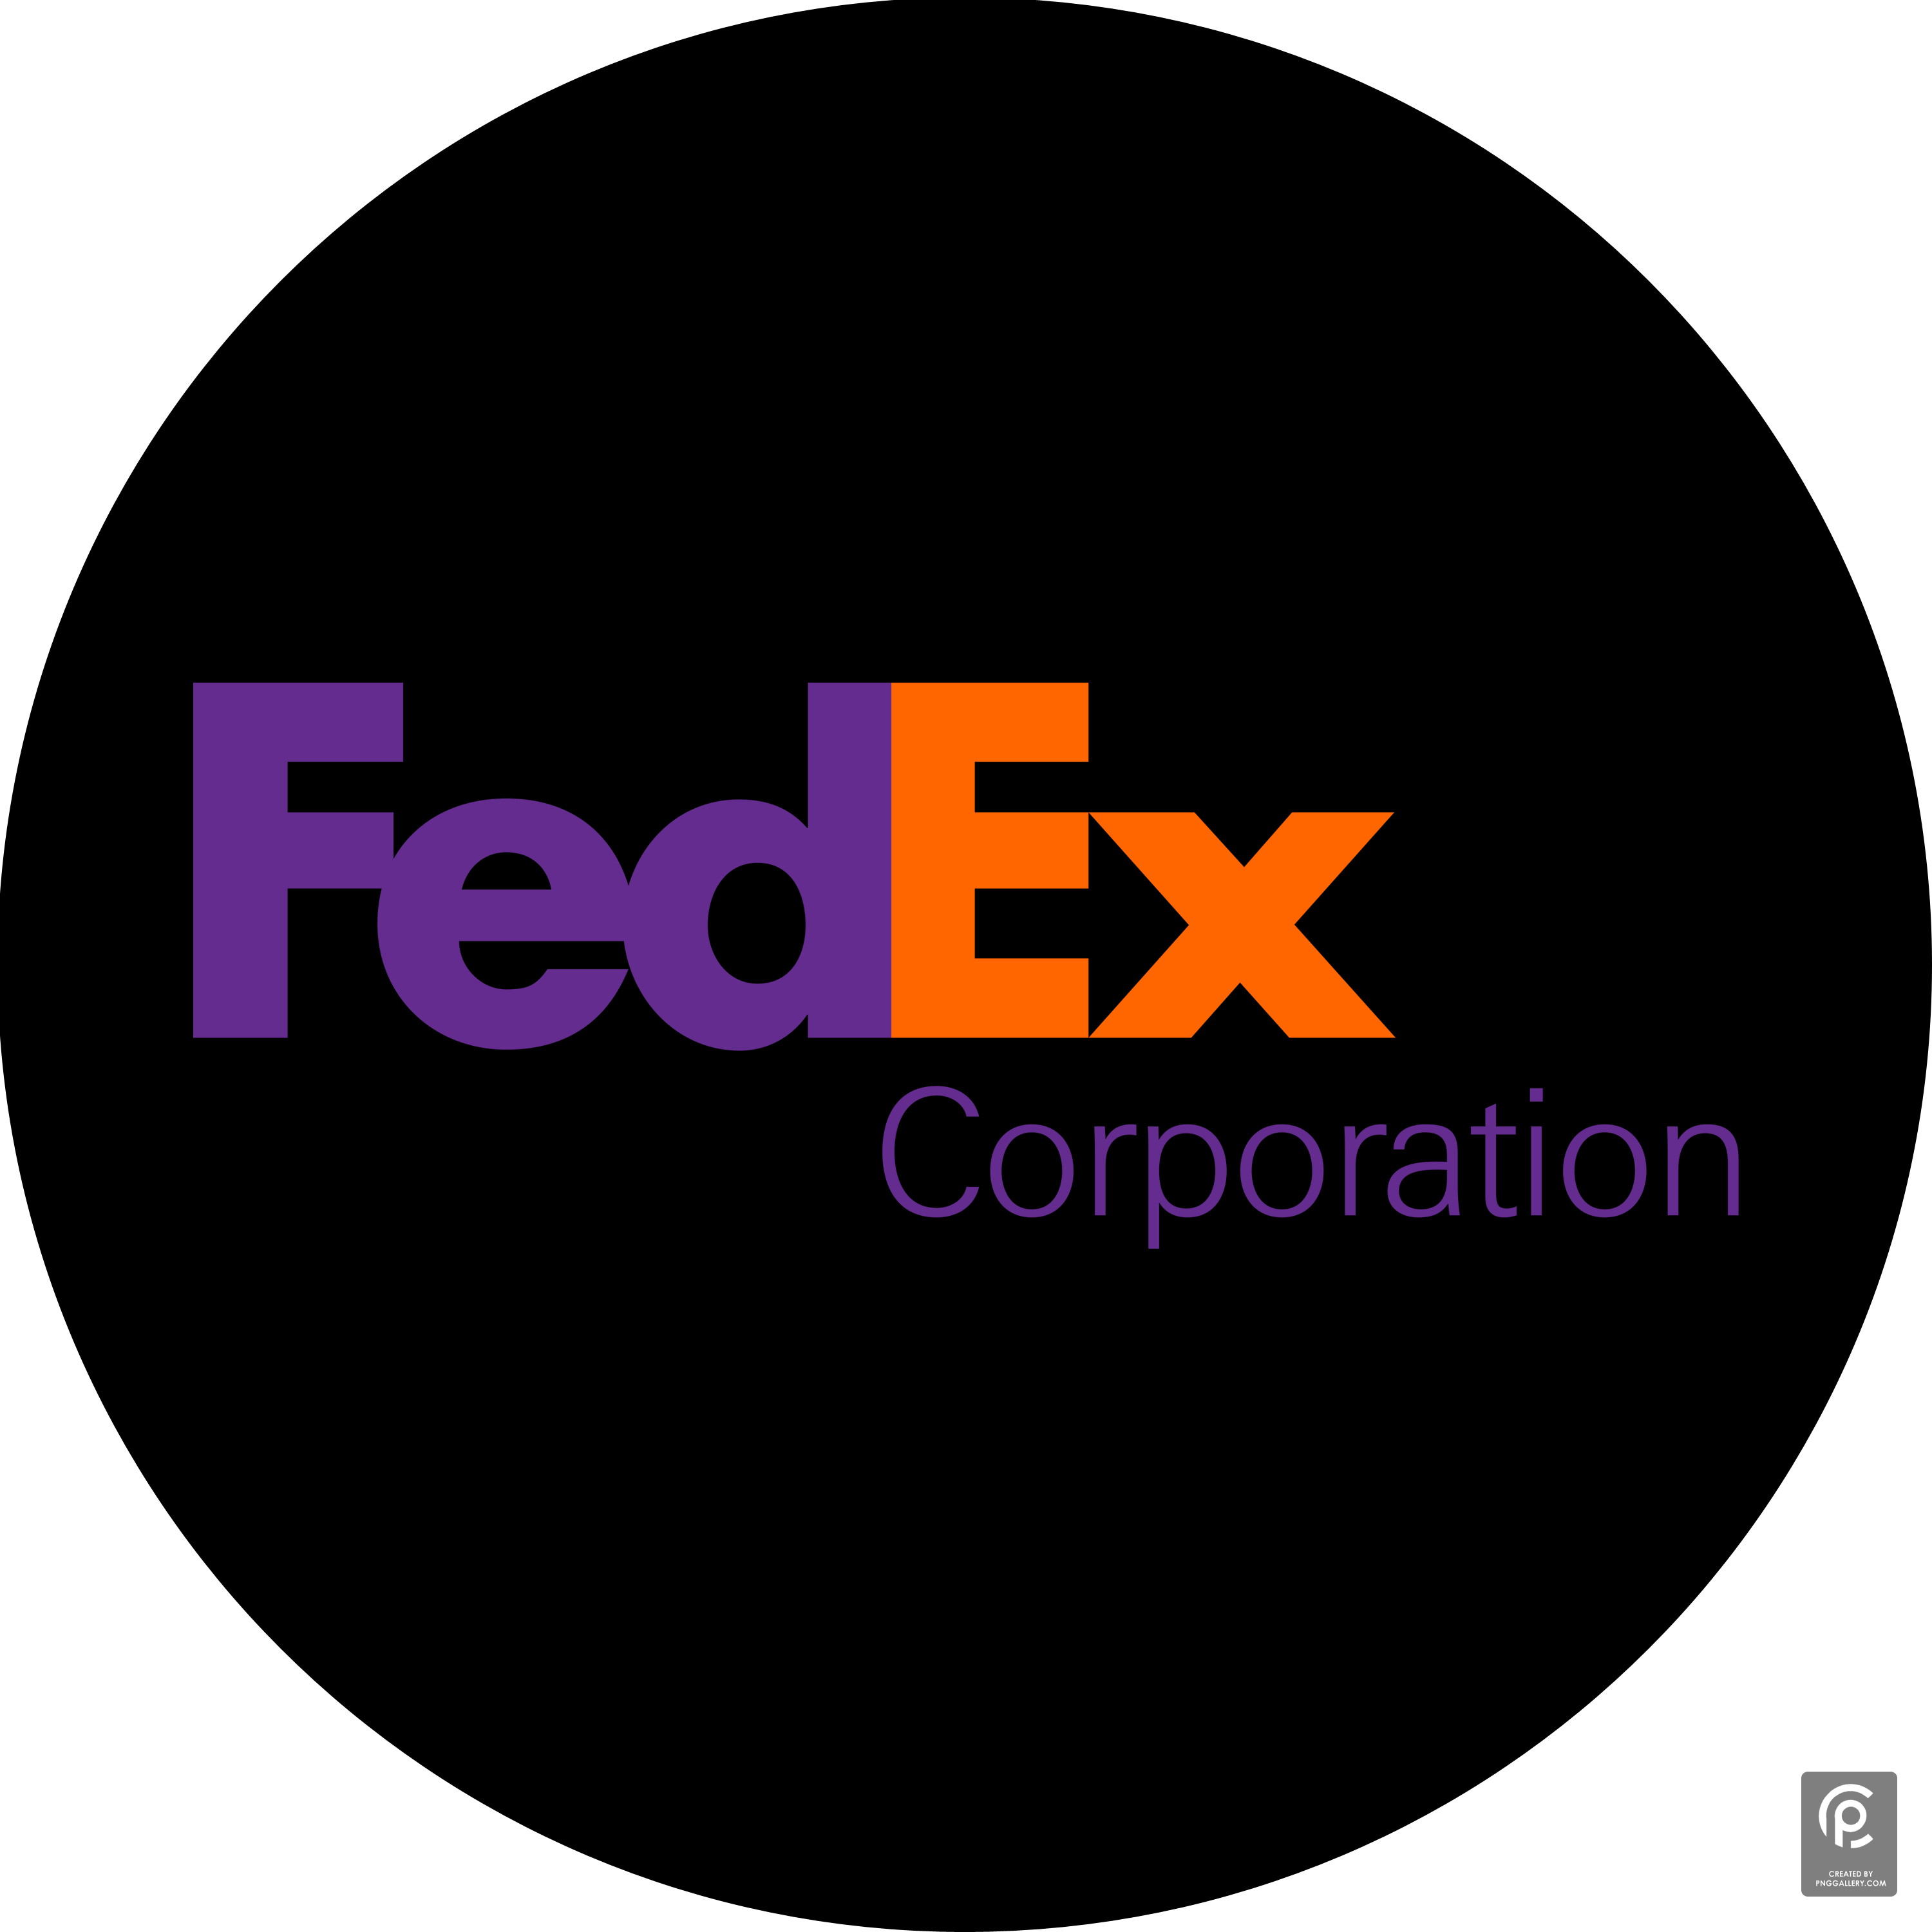 Fedex Corporation Logo Transparent Gallery